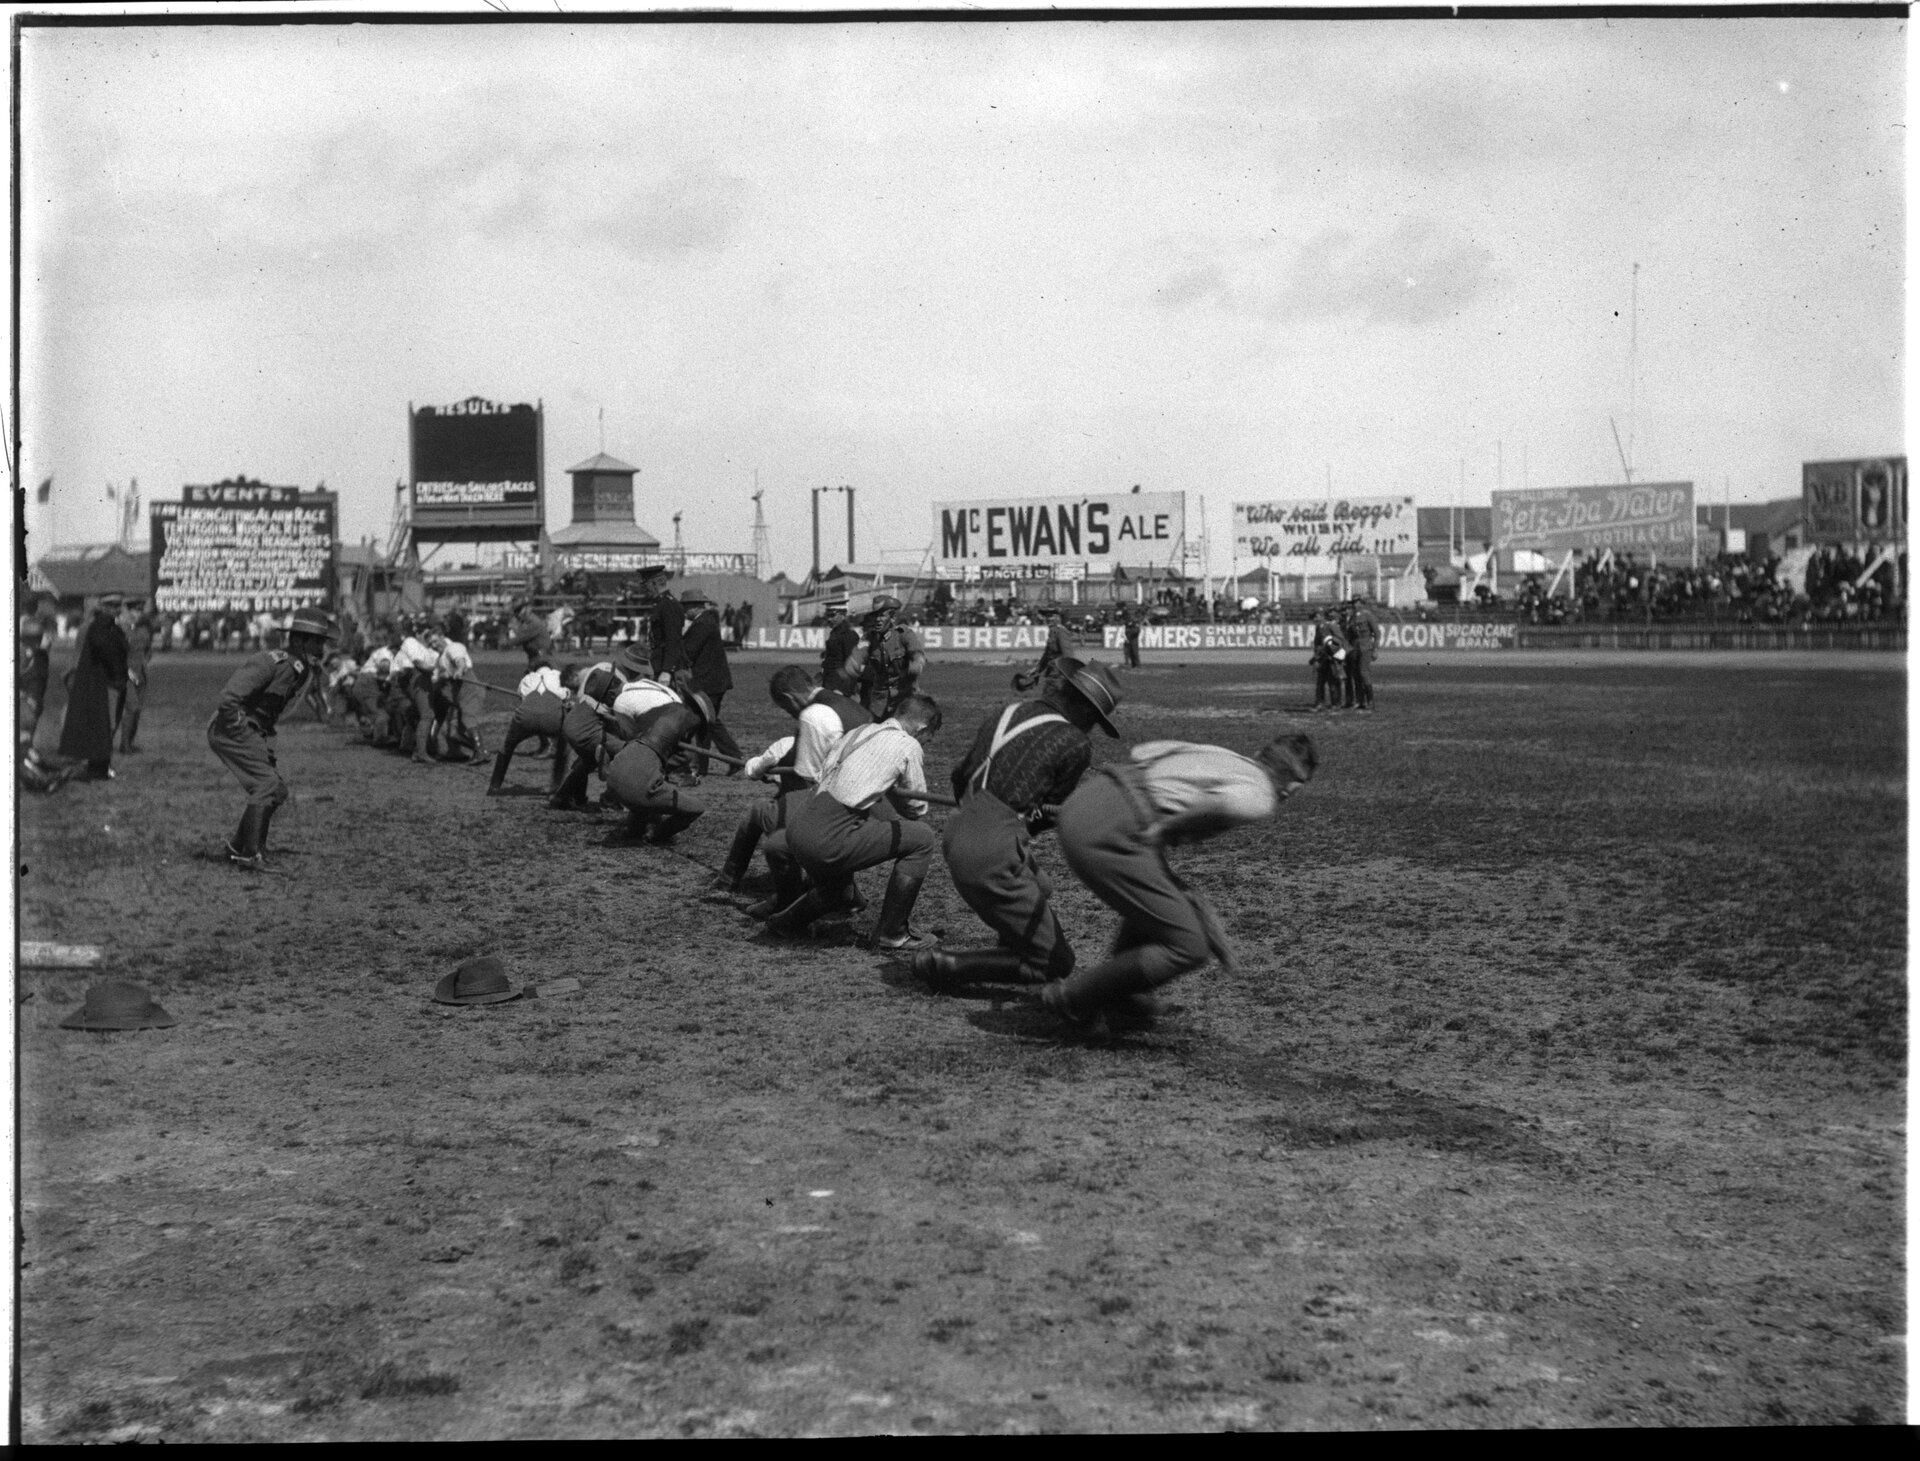 Men playing tug-o-war on a field